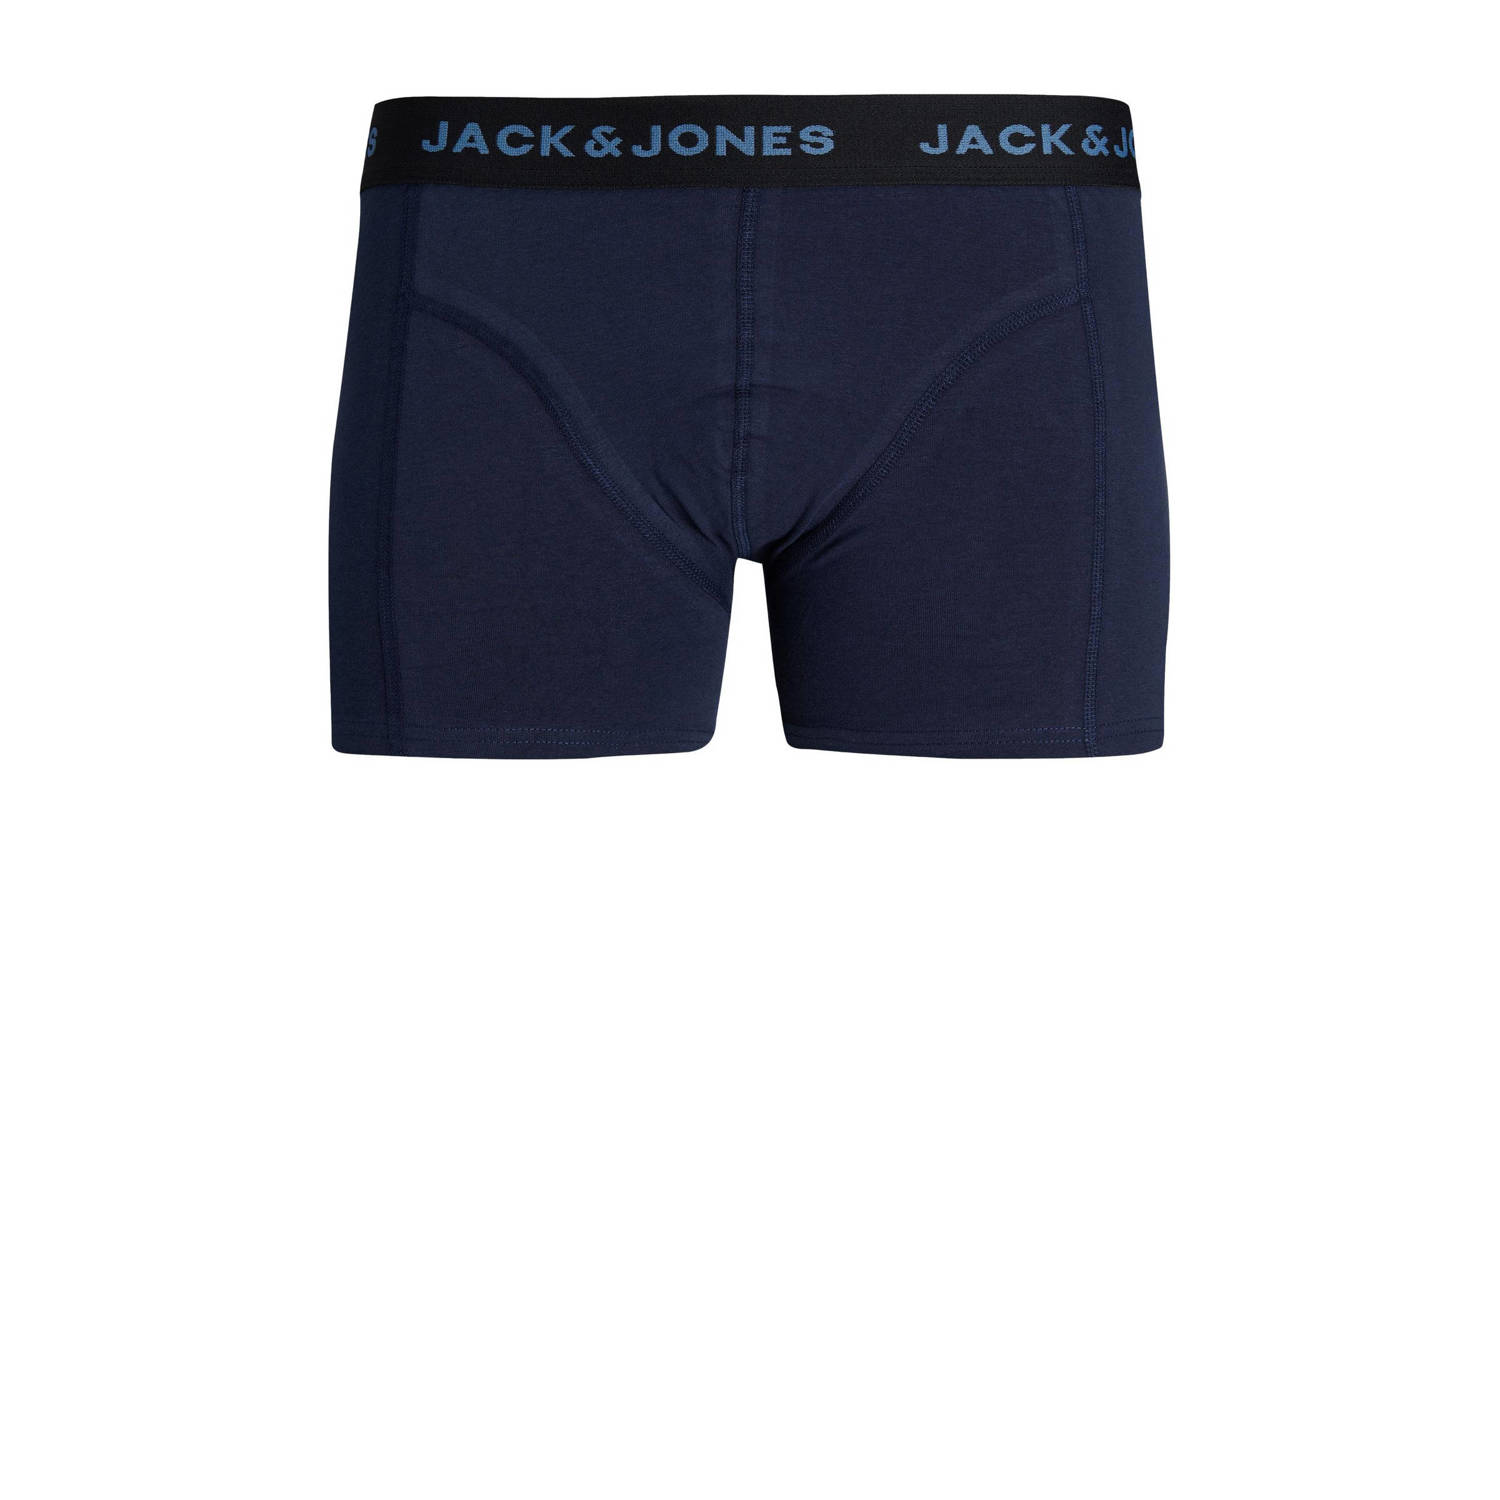 JACK & JONES JUNIOR boxershort JACSWEET SANTA set van 3 donkerblauw groen